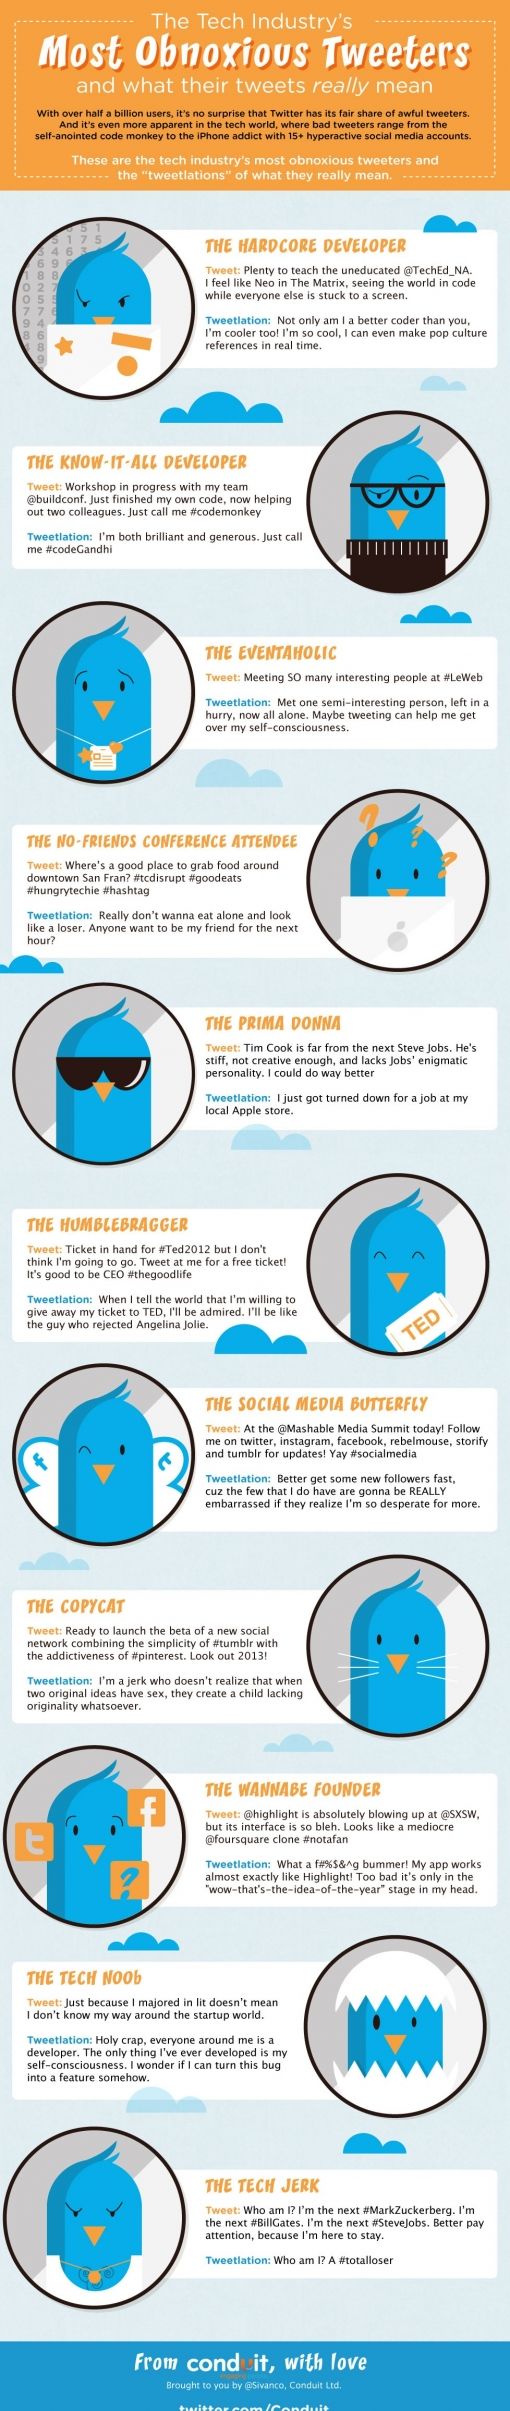 obnoxious-tweeters-infographic.jpg